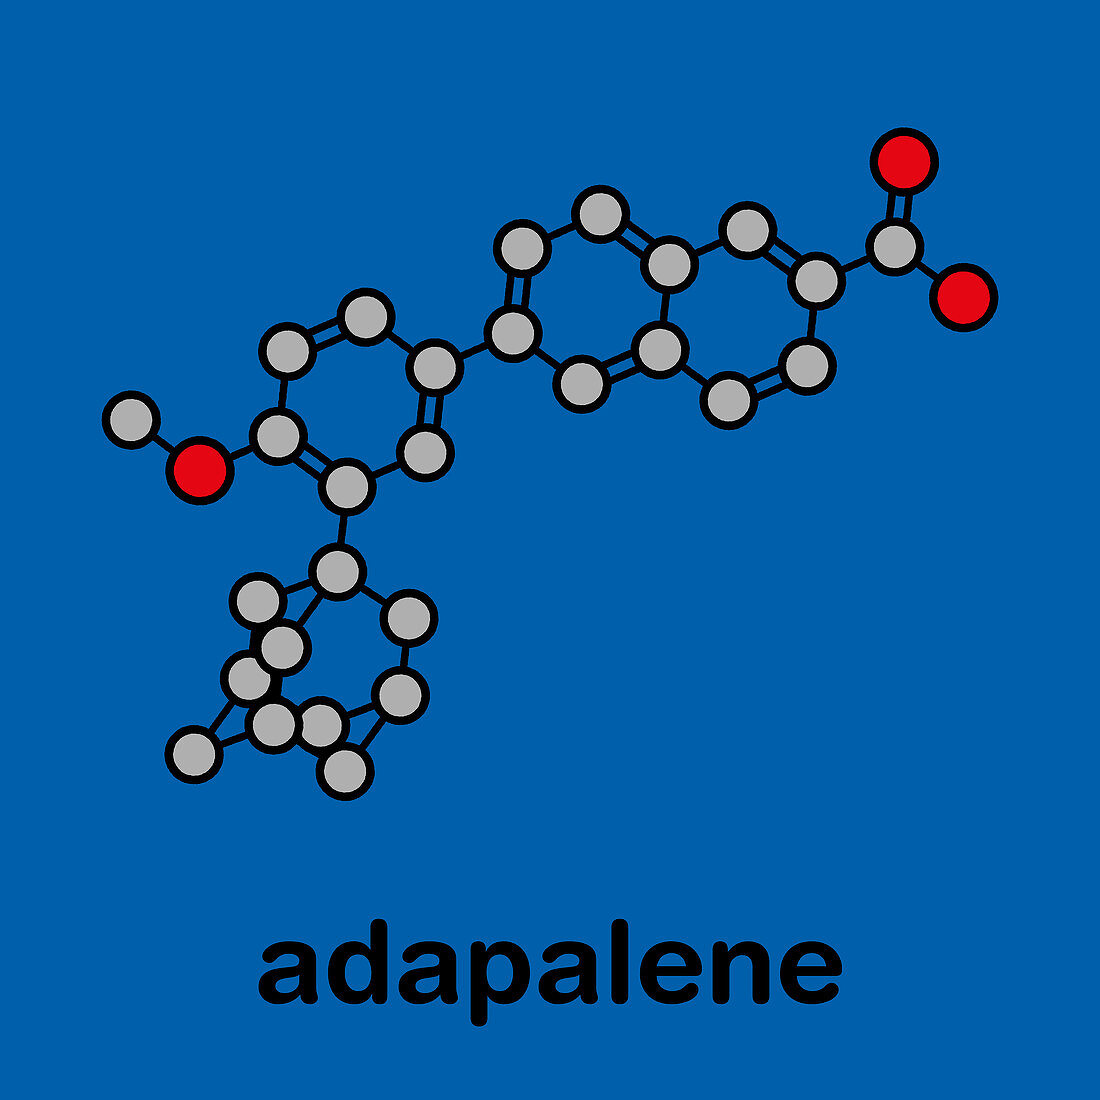 Adapalene acne treatment drug molecule, illustration